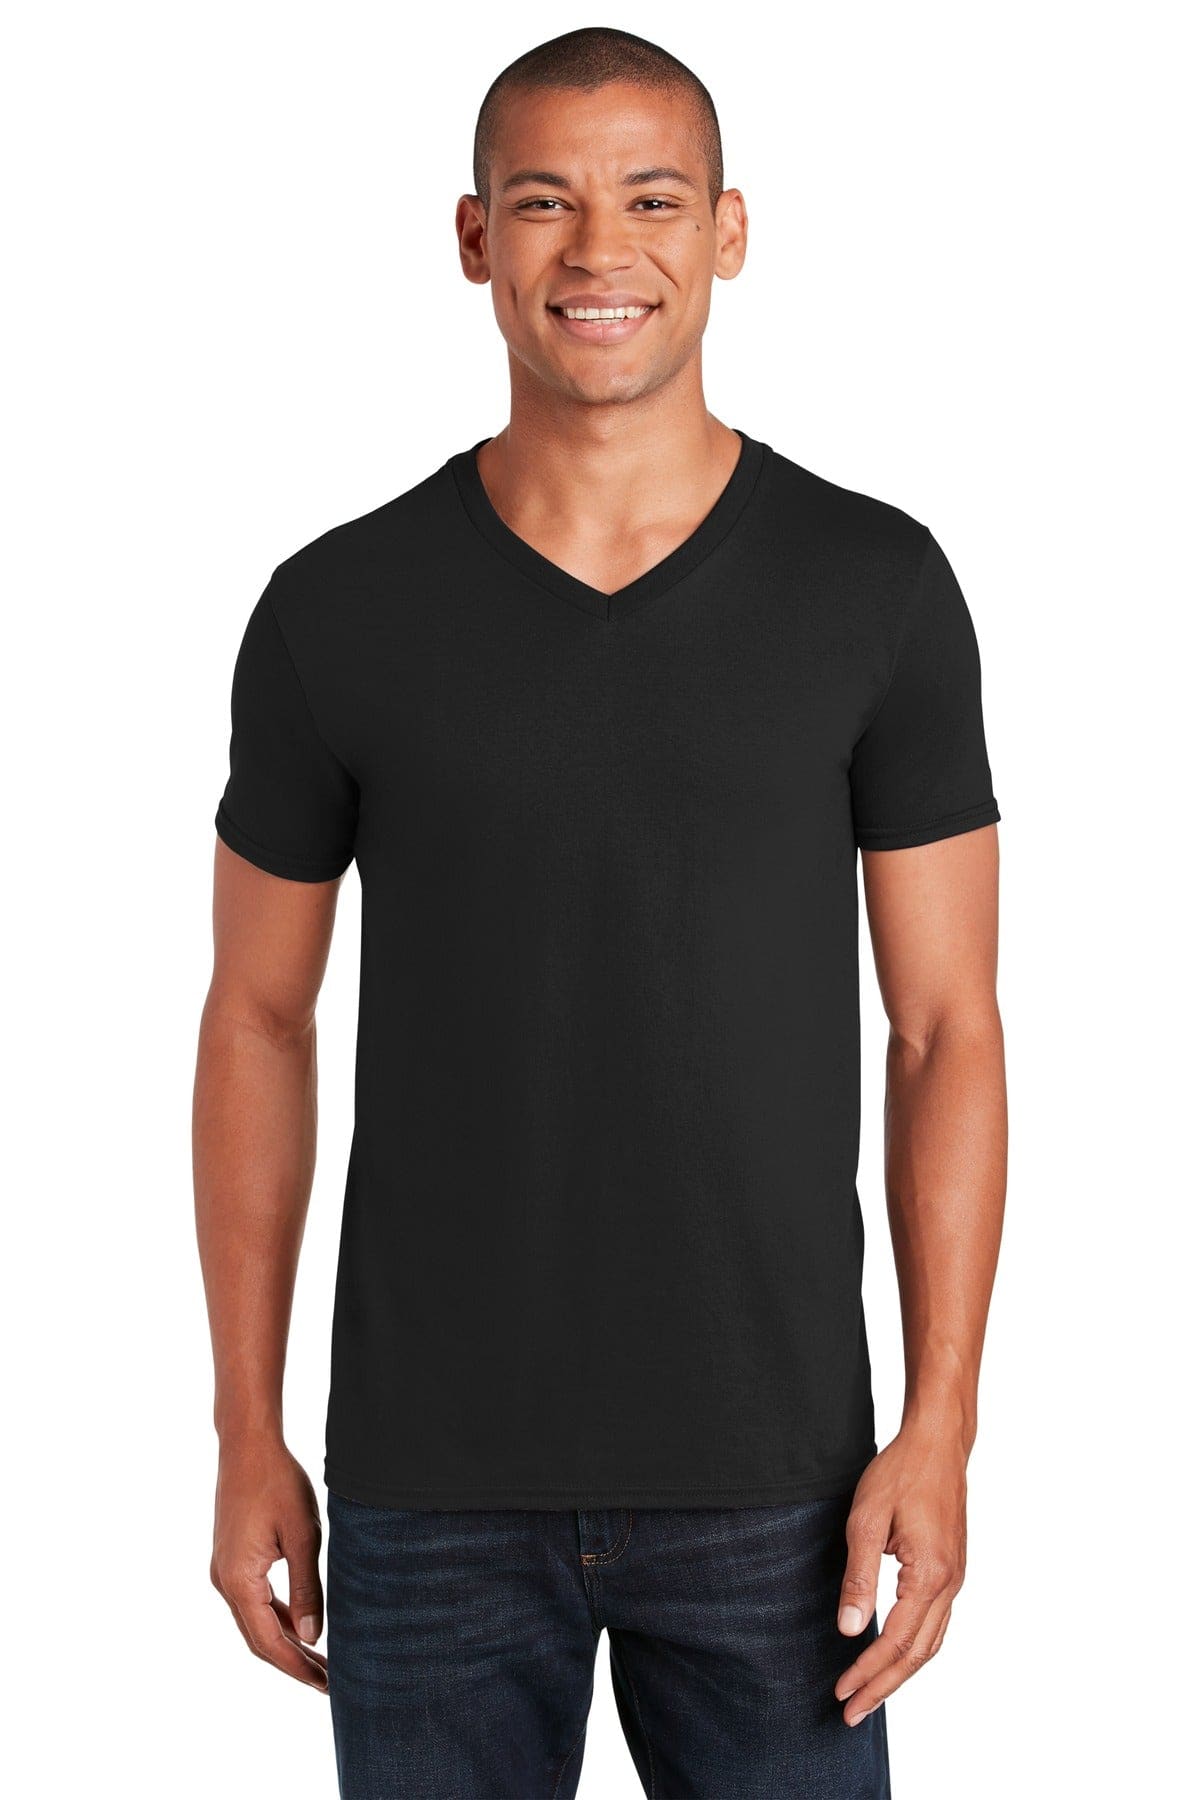 Gildan Softstyle V - neck T - shirt. 64v00 - Activewear T - Tops / Shirtss